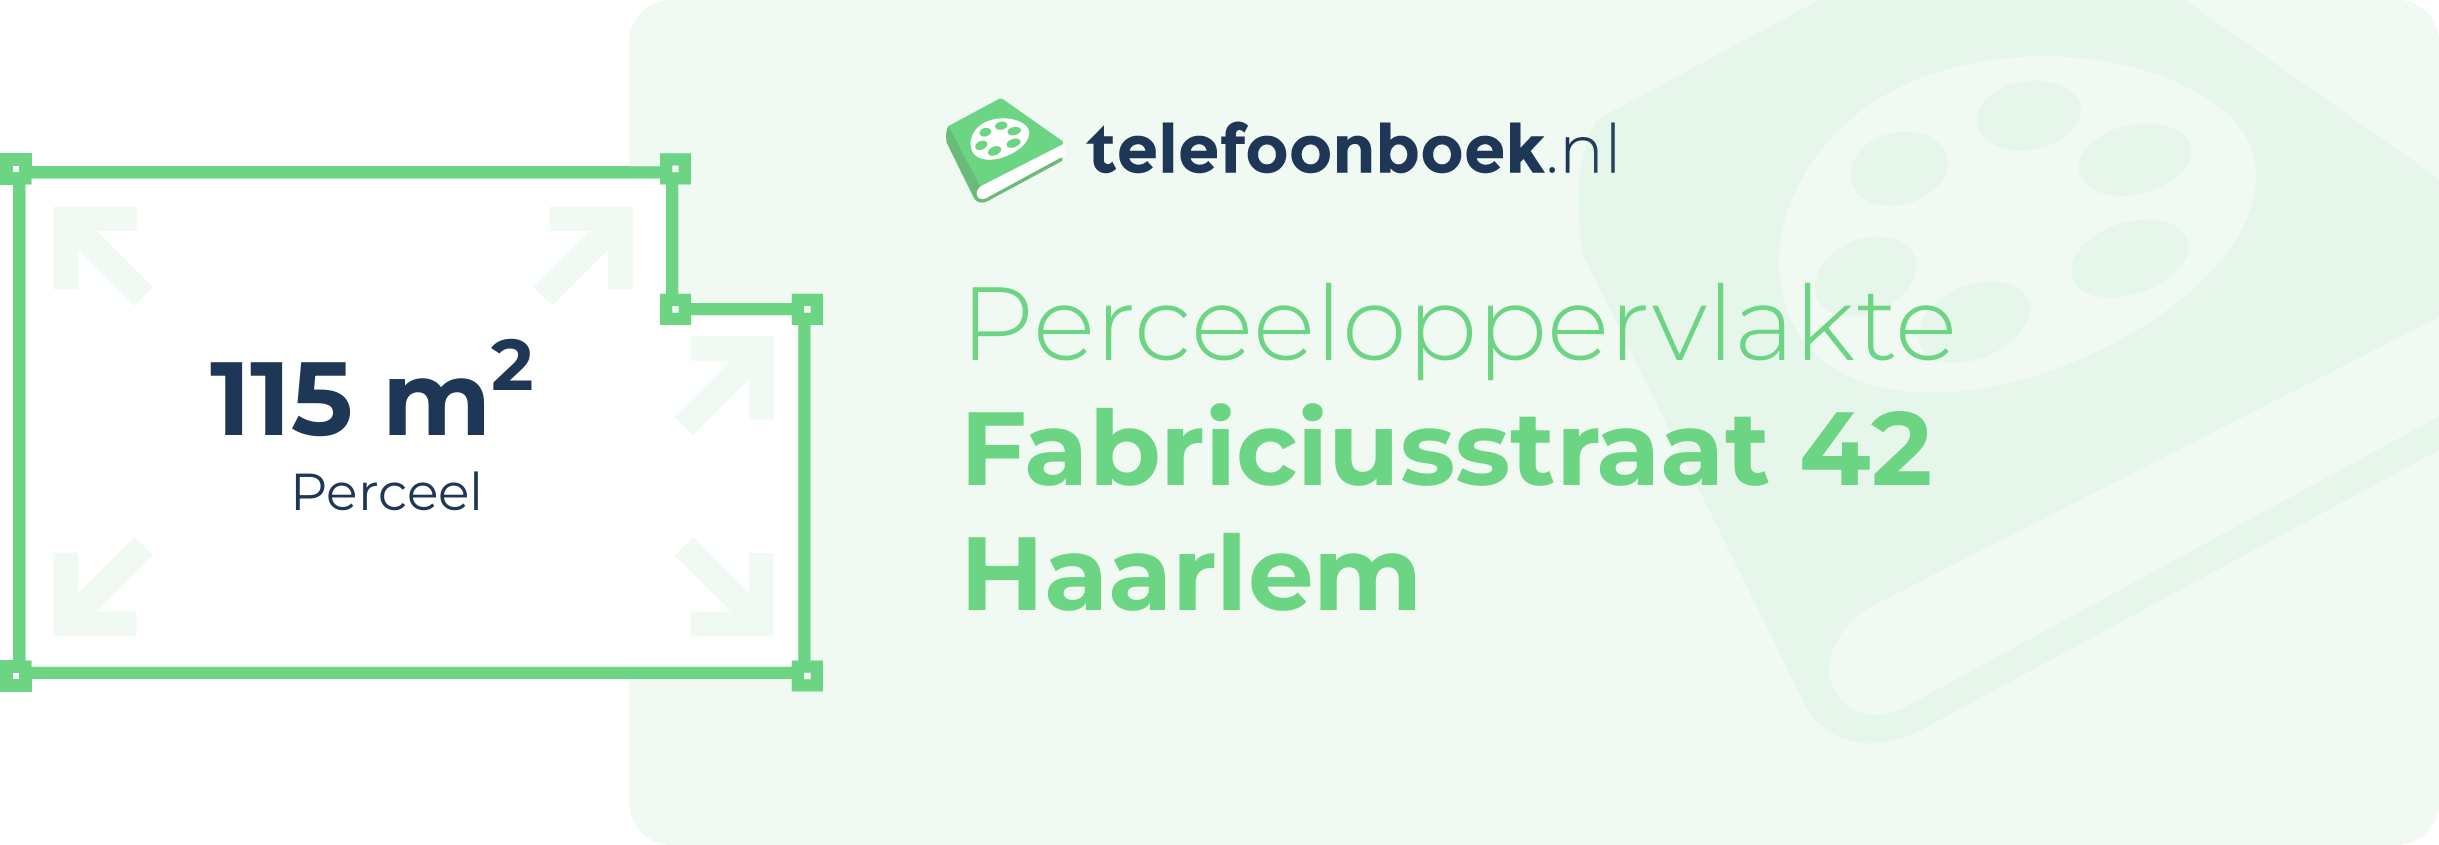 Perceeloppervlakte Fabriciusstraat 42 Haarlem